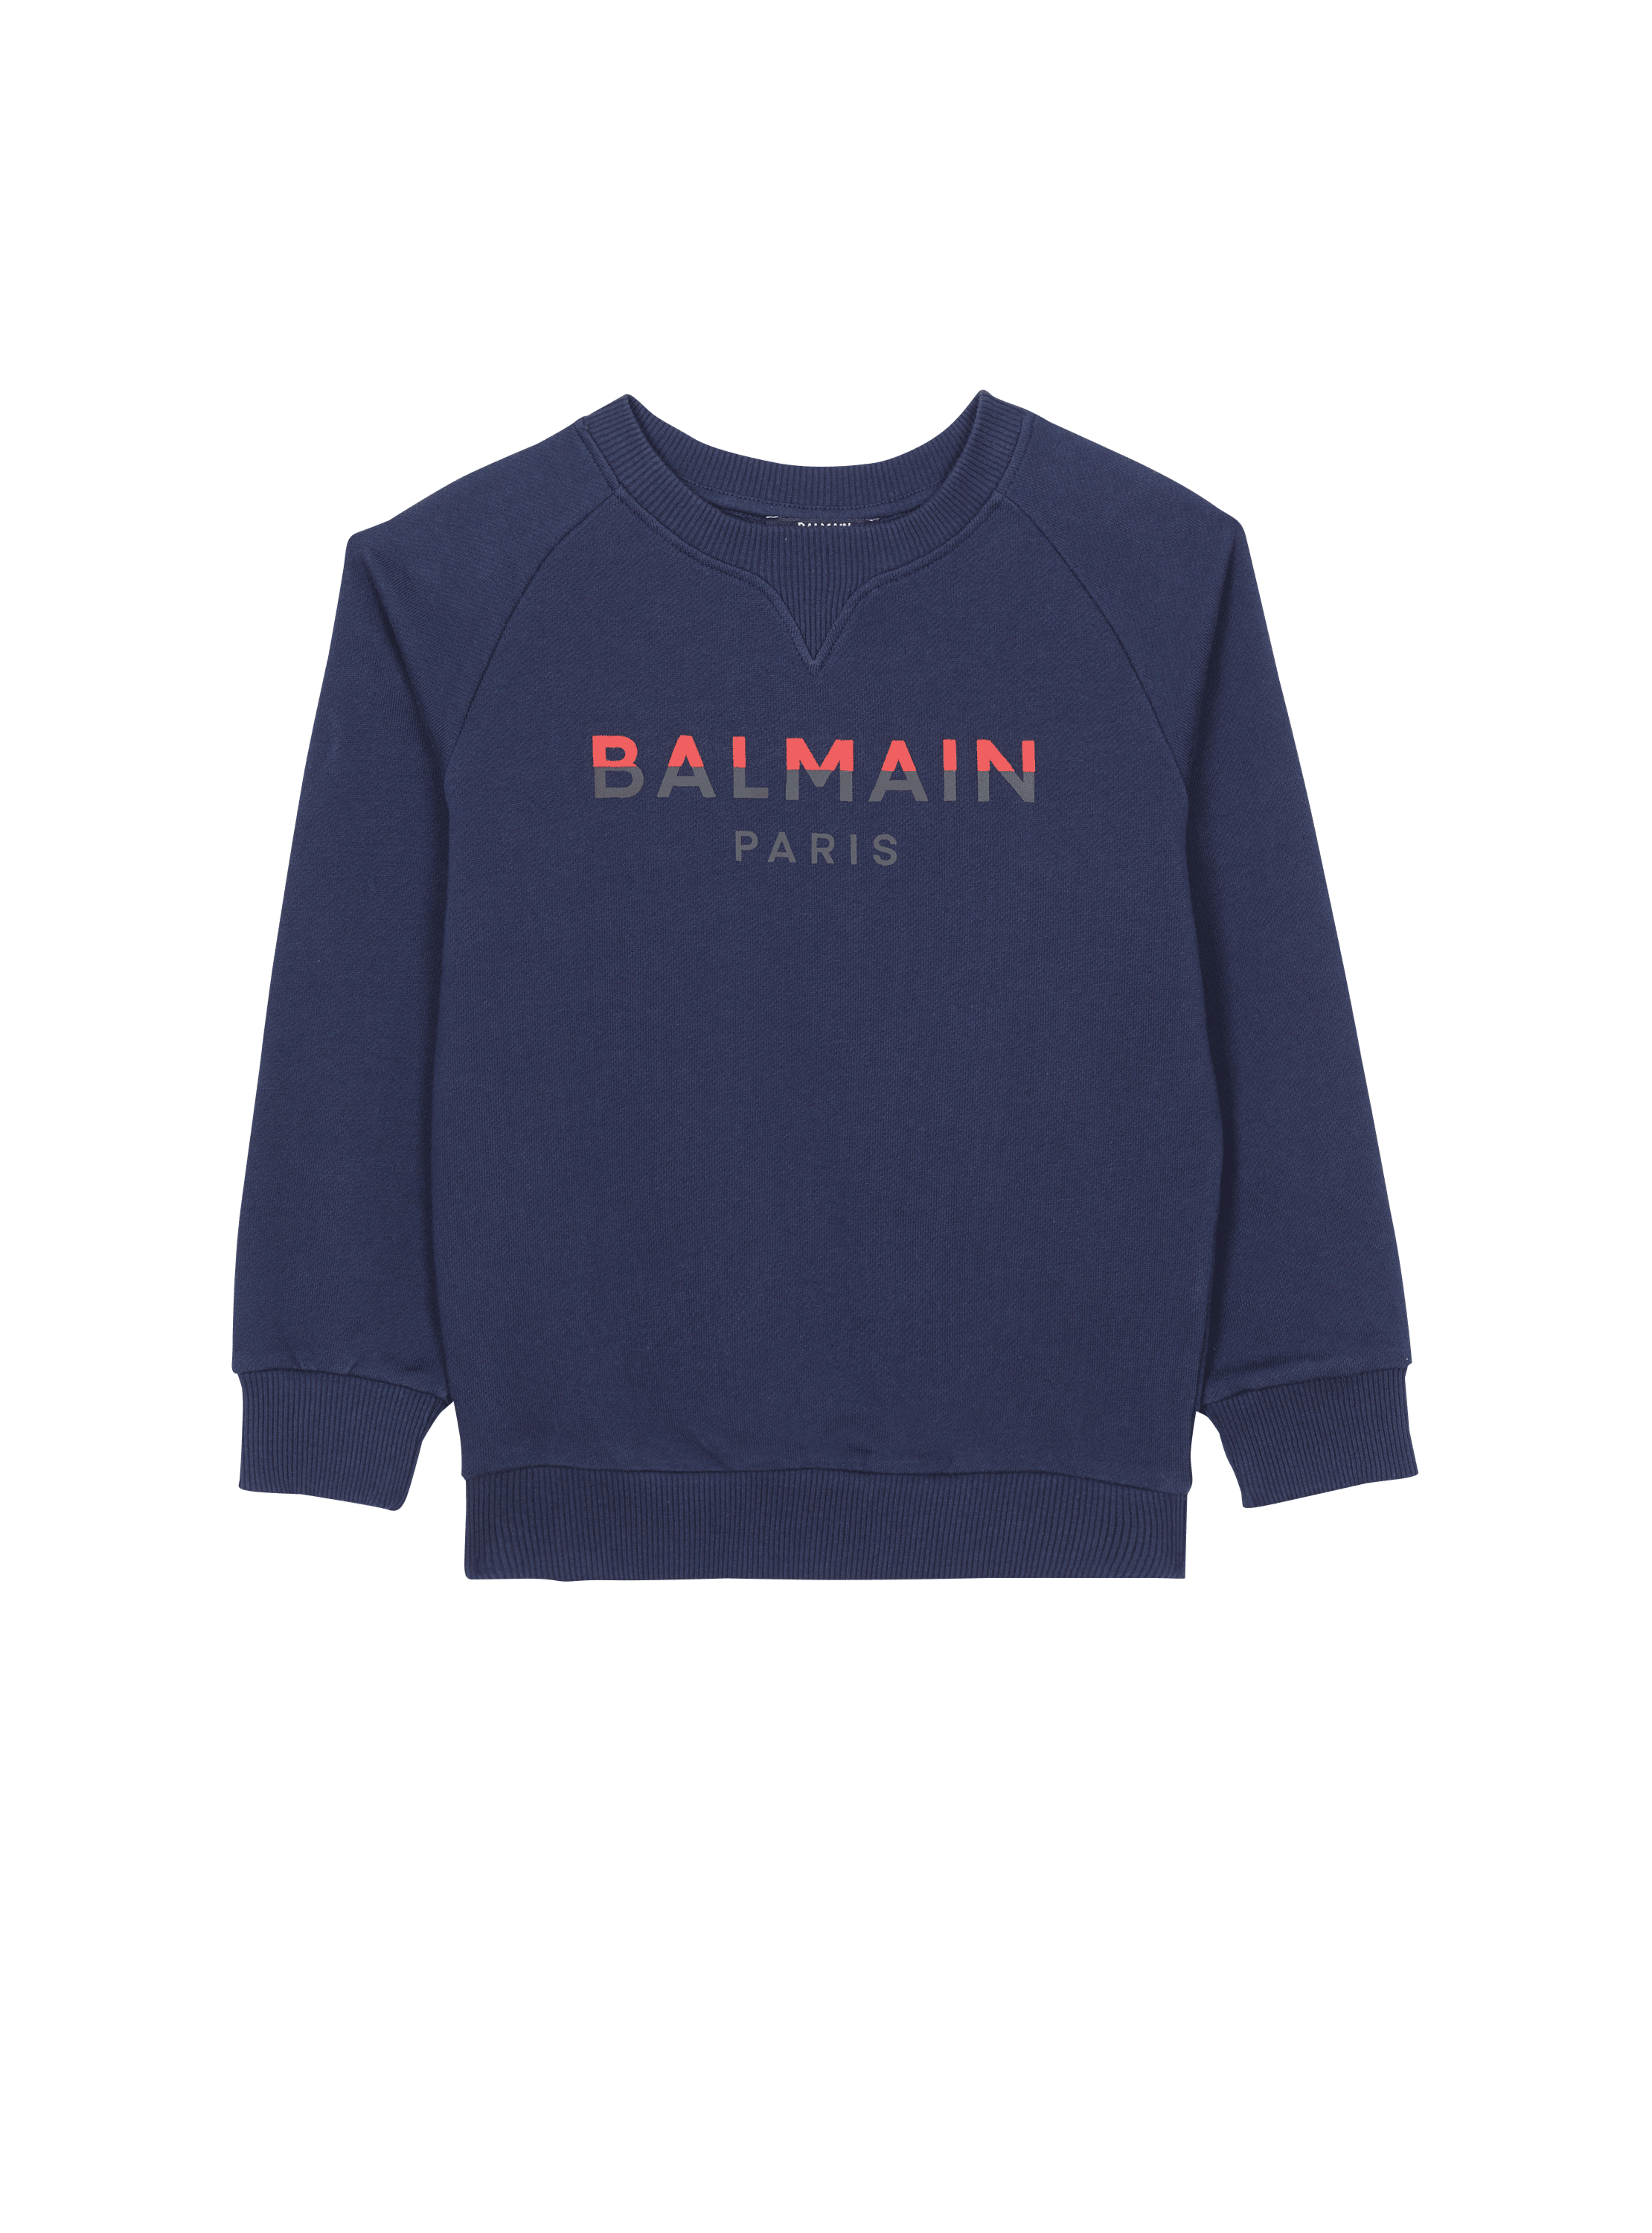 Balmain Paris sweatshirt navy - Child | BALMAIN